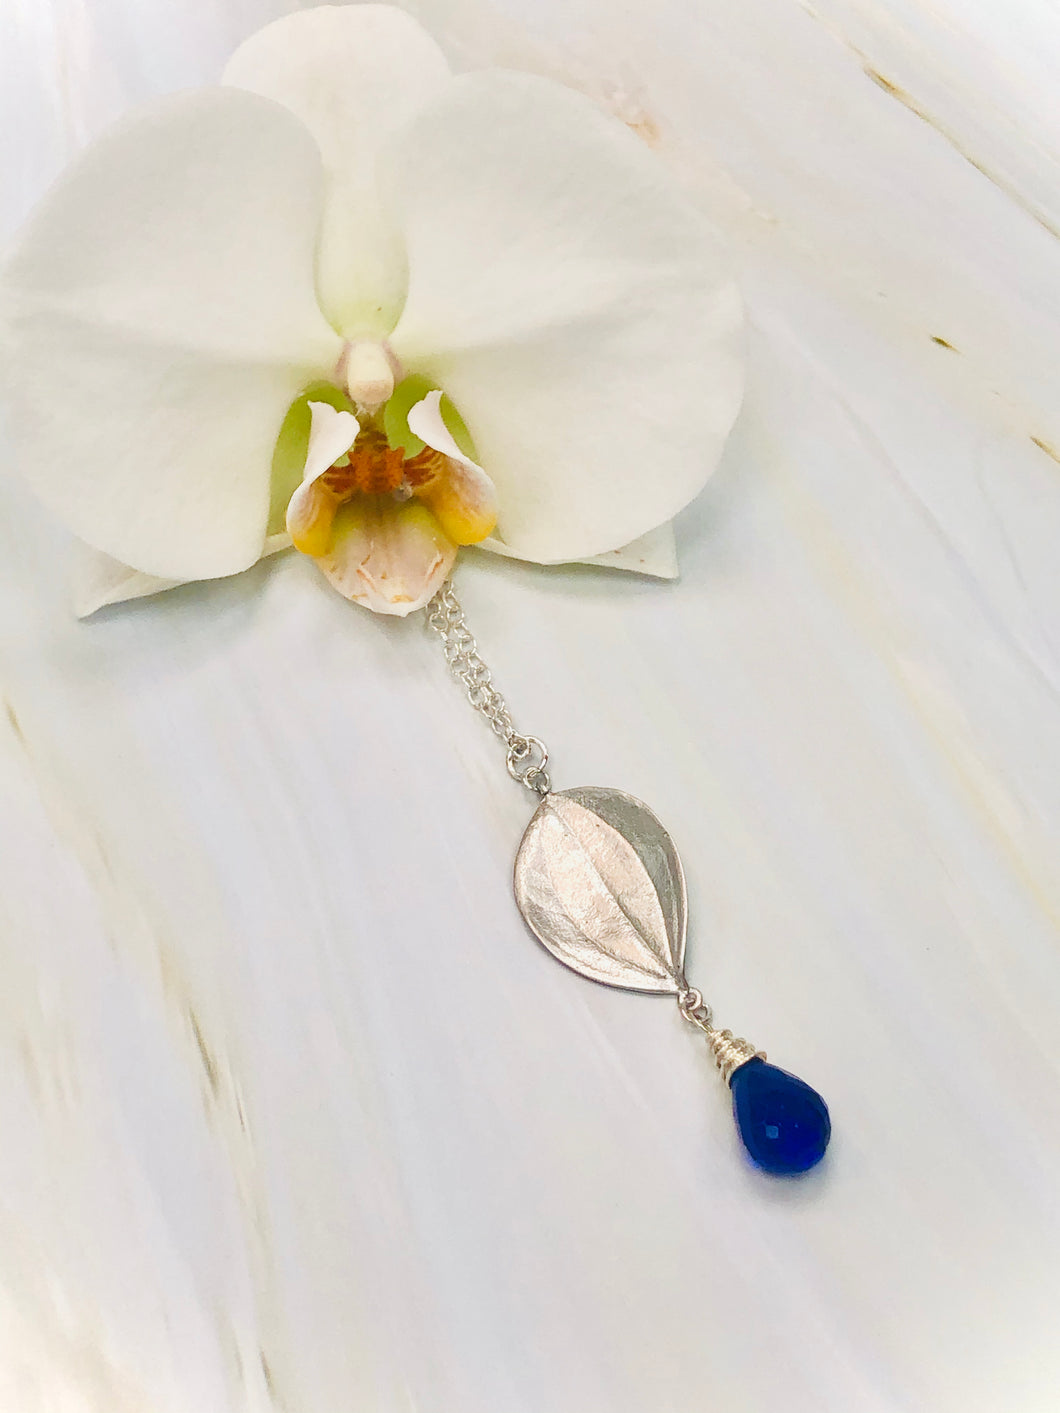 Inky blue quartz necklace leaf sterling silver necklace